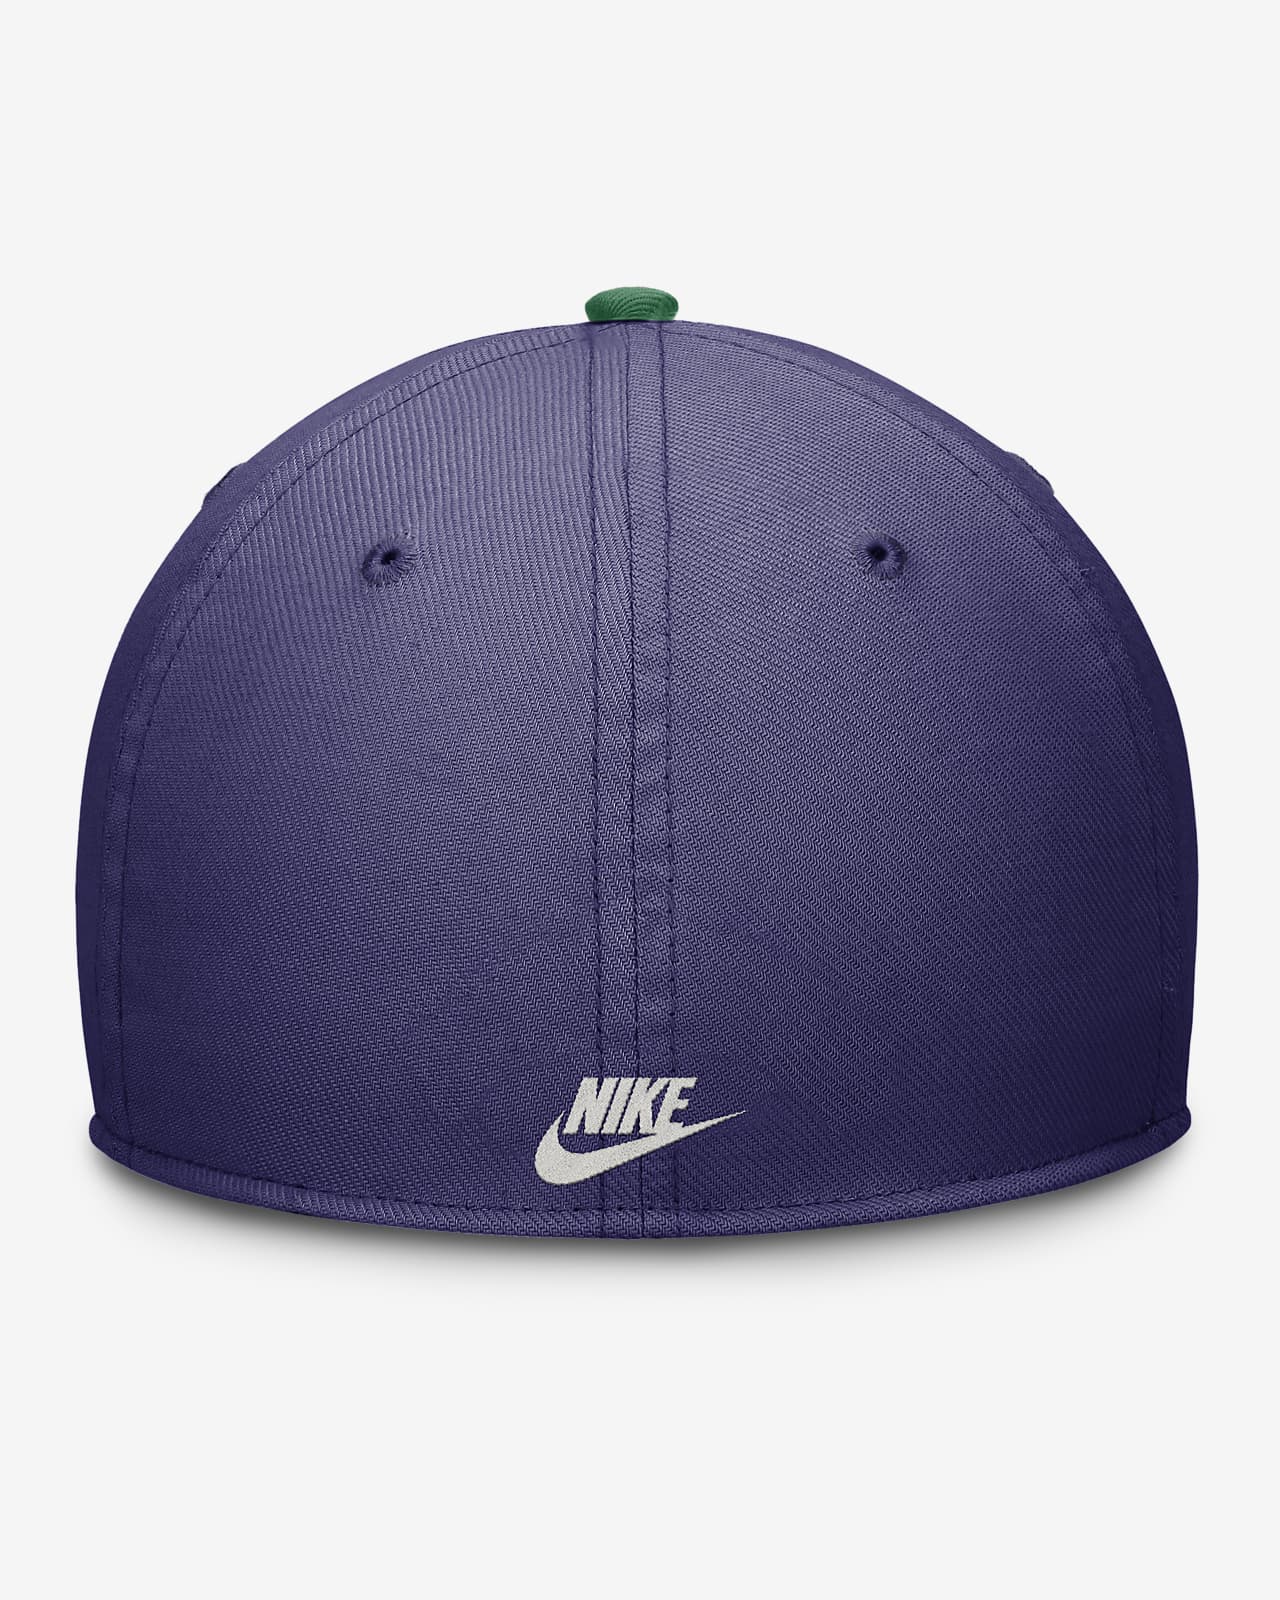 Tampa Bay Rays Rewind Cooperstown Swoosh Men's Nike Dri-FIT MLB Hat